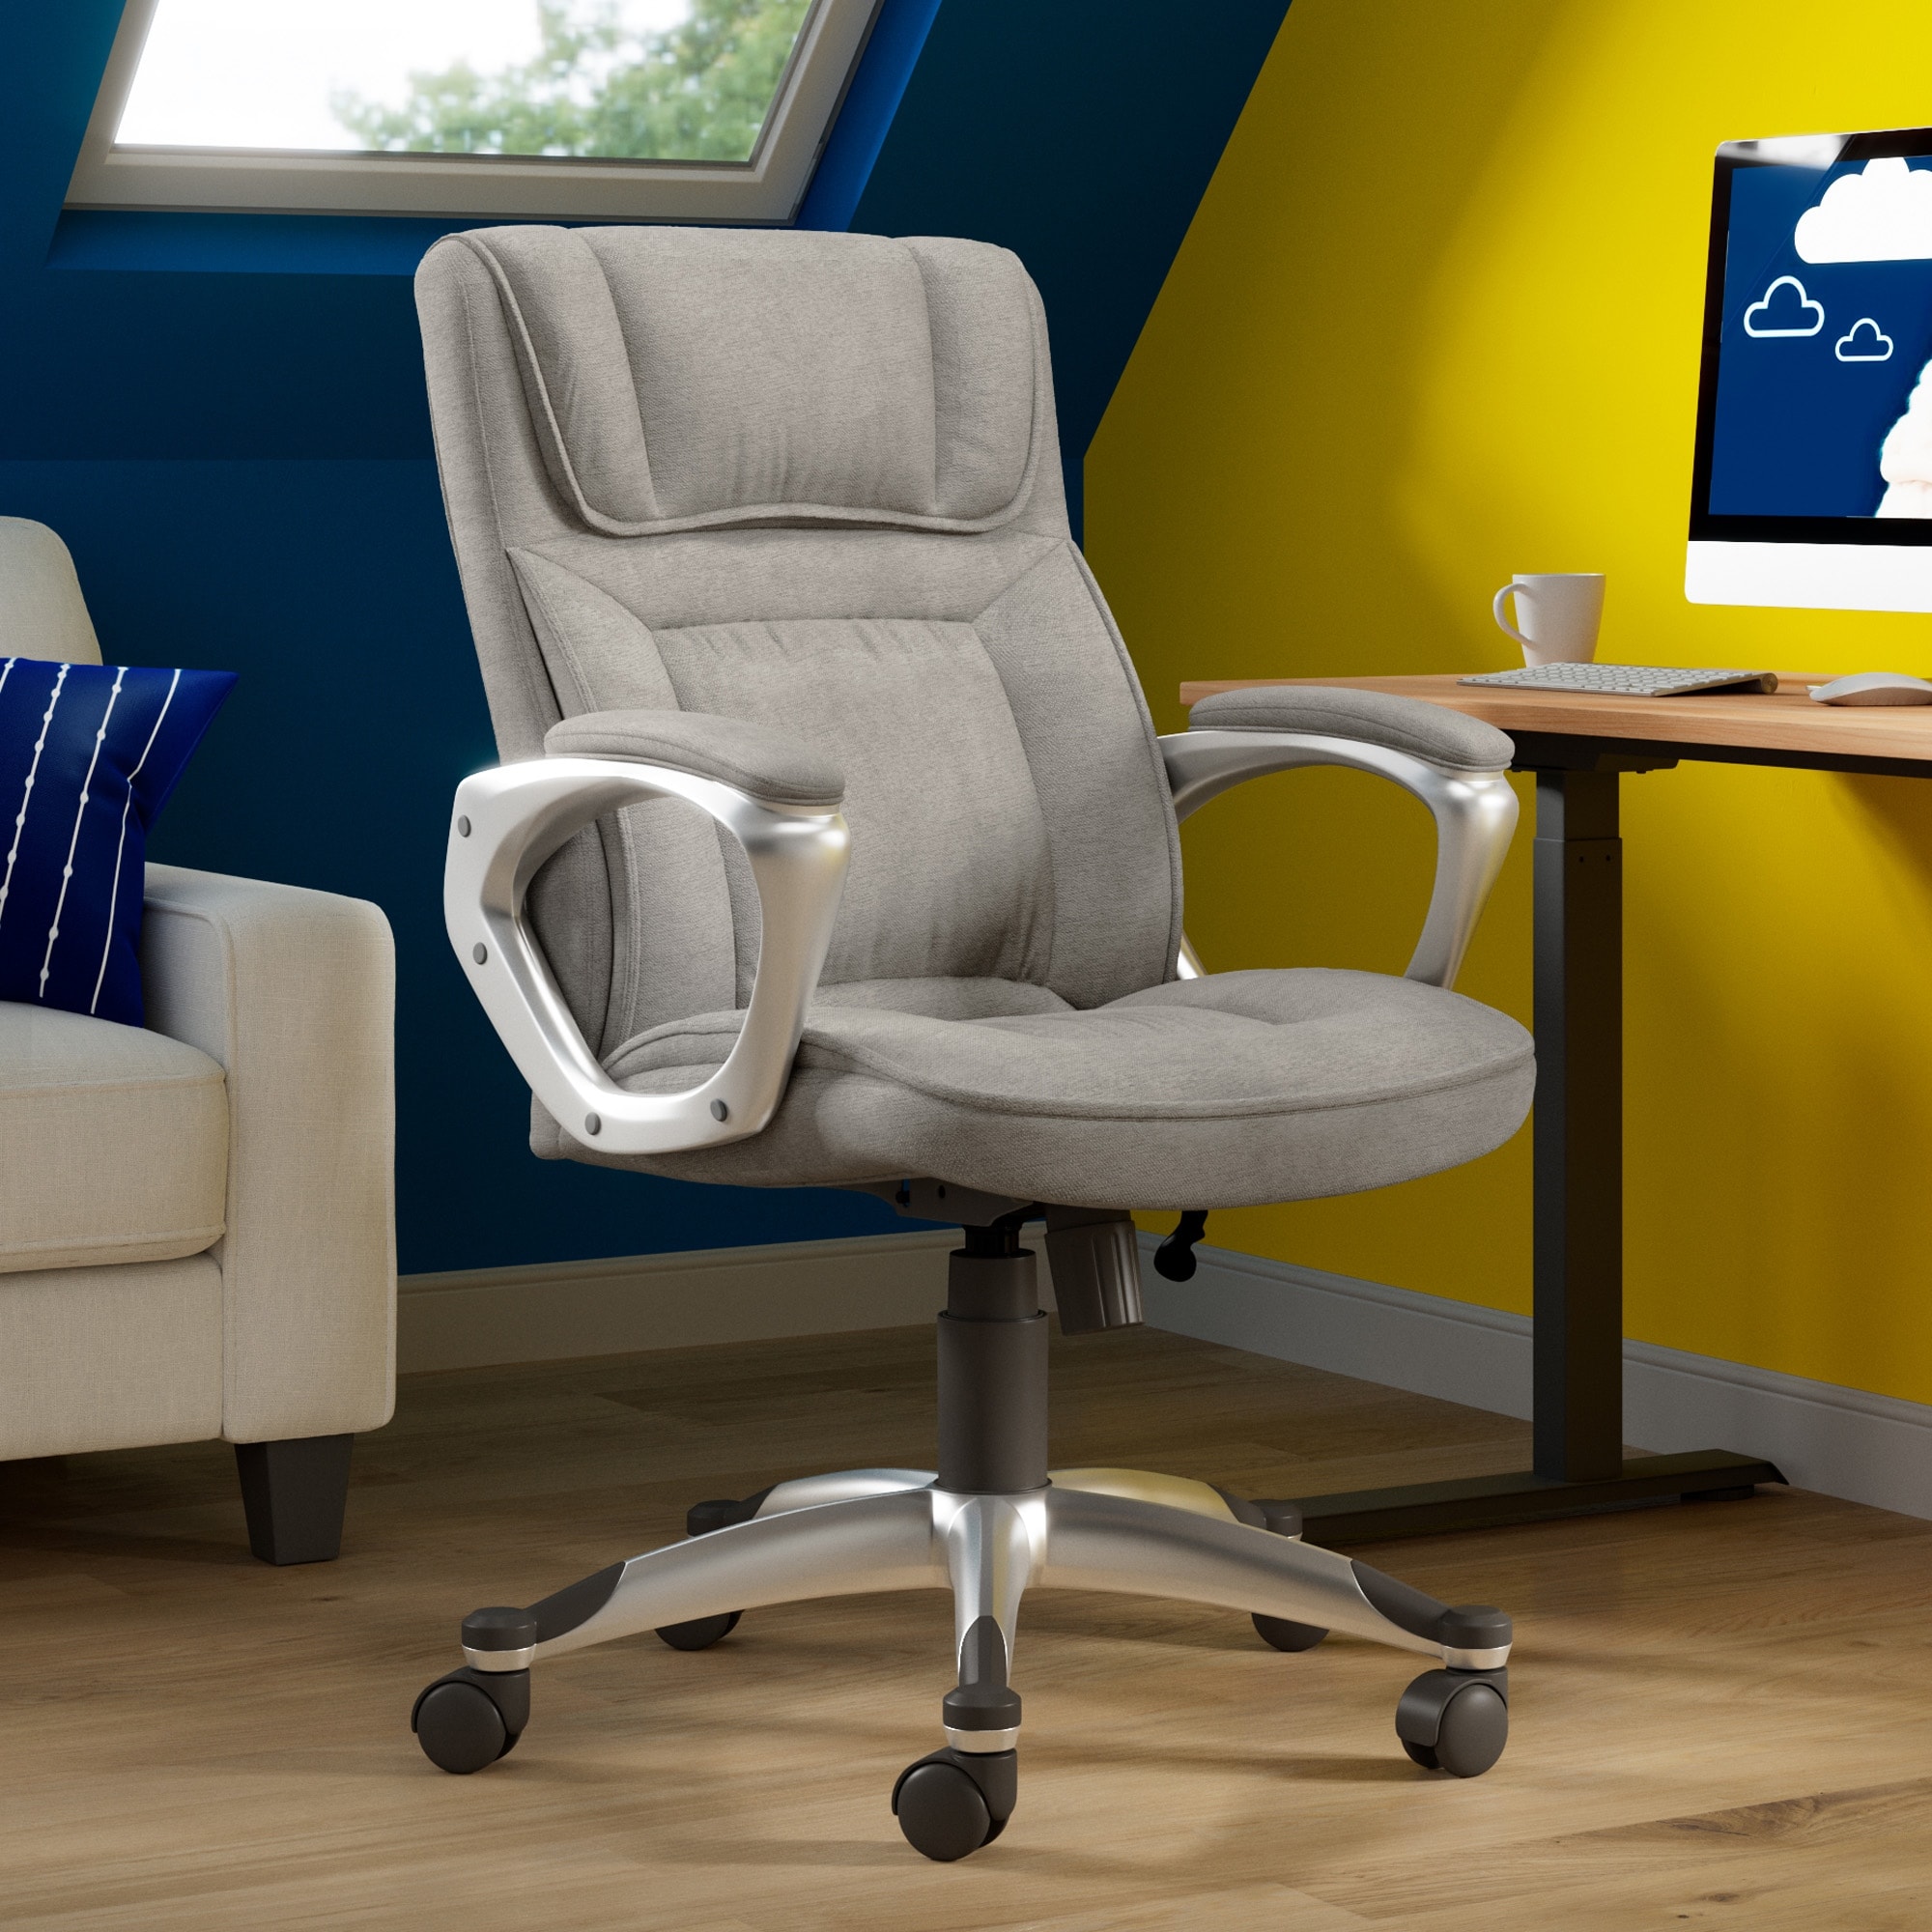 https://ak1.ostkcdn.com/images/products/is/images/direct/342edf63d5f09855c8e200de04584b0007600e0e/Serta-Hannah-Office-Chair-with-Headrest-Pillow%2C-Adjustable-Ergonomic-Desk-Chair-with-Lumbar-Support.jpg